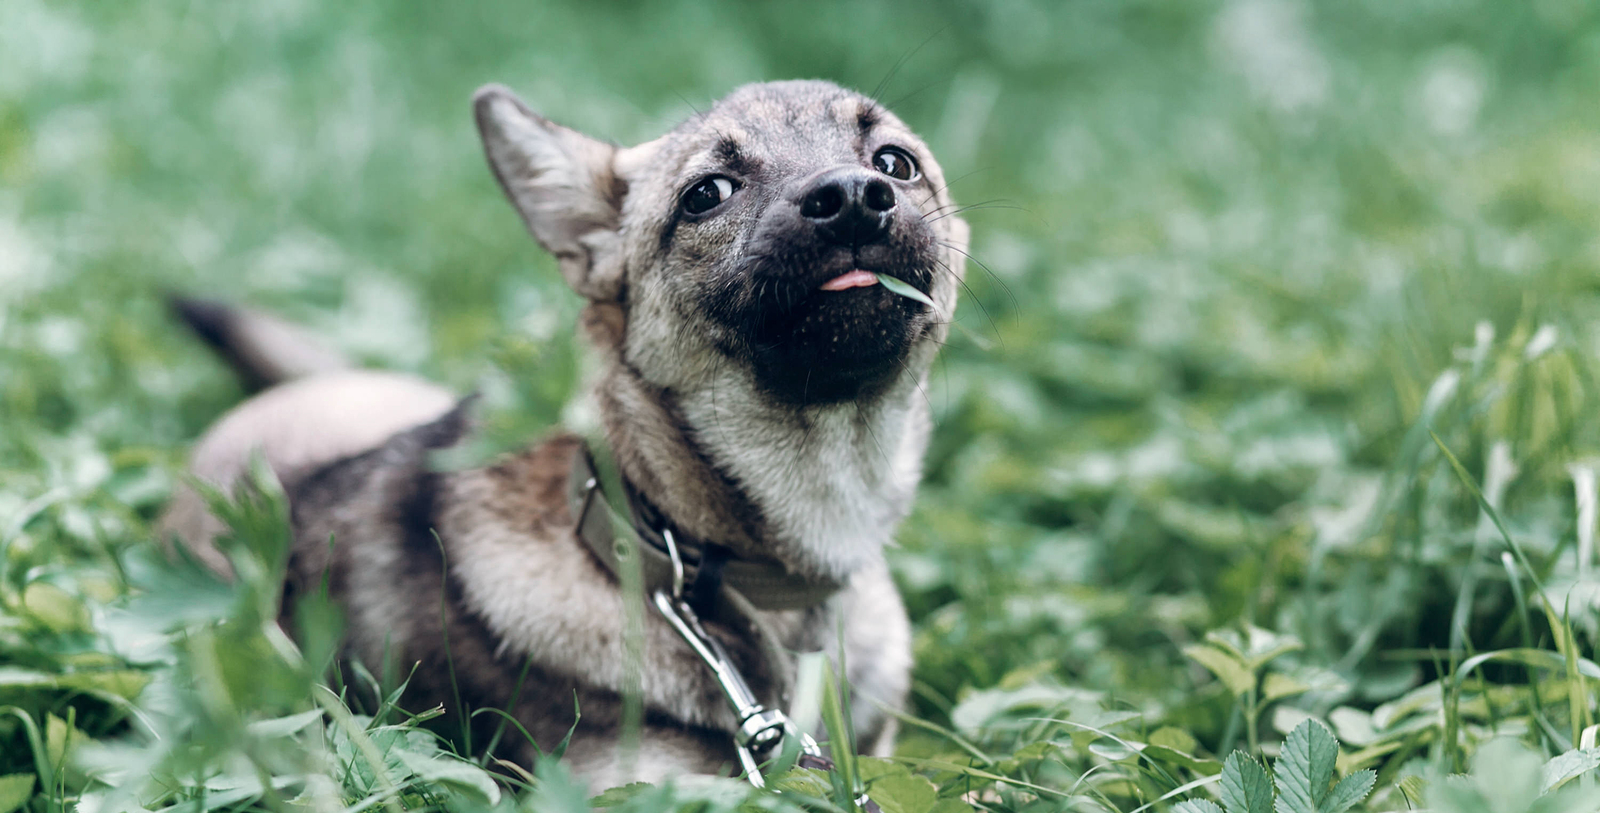 my dog loves eating grass